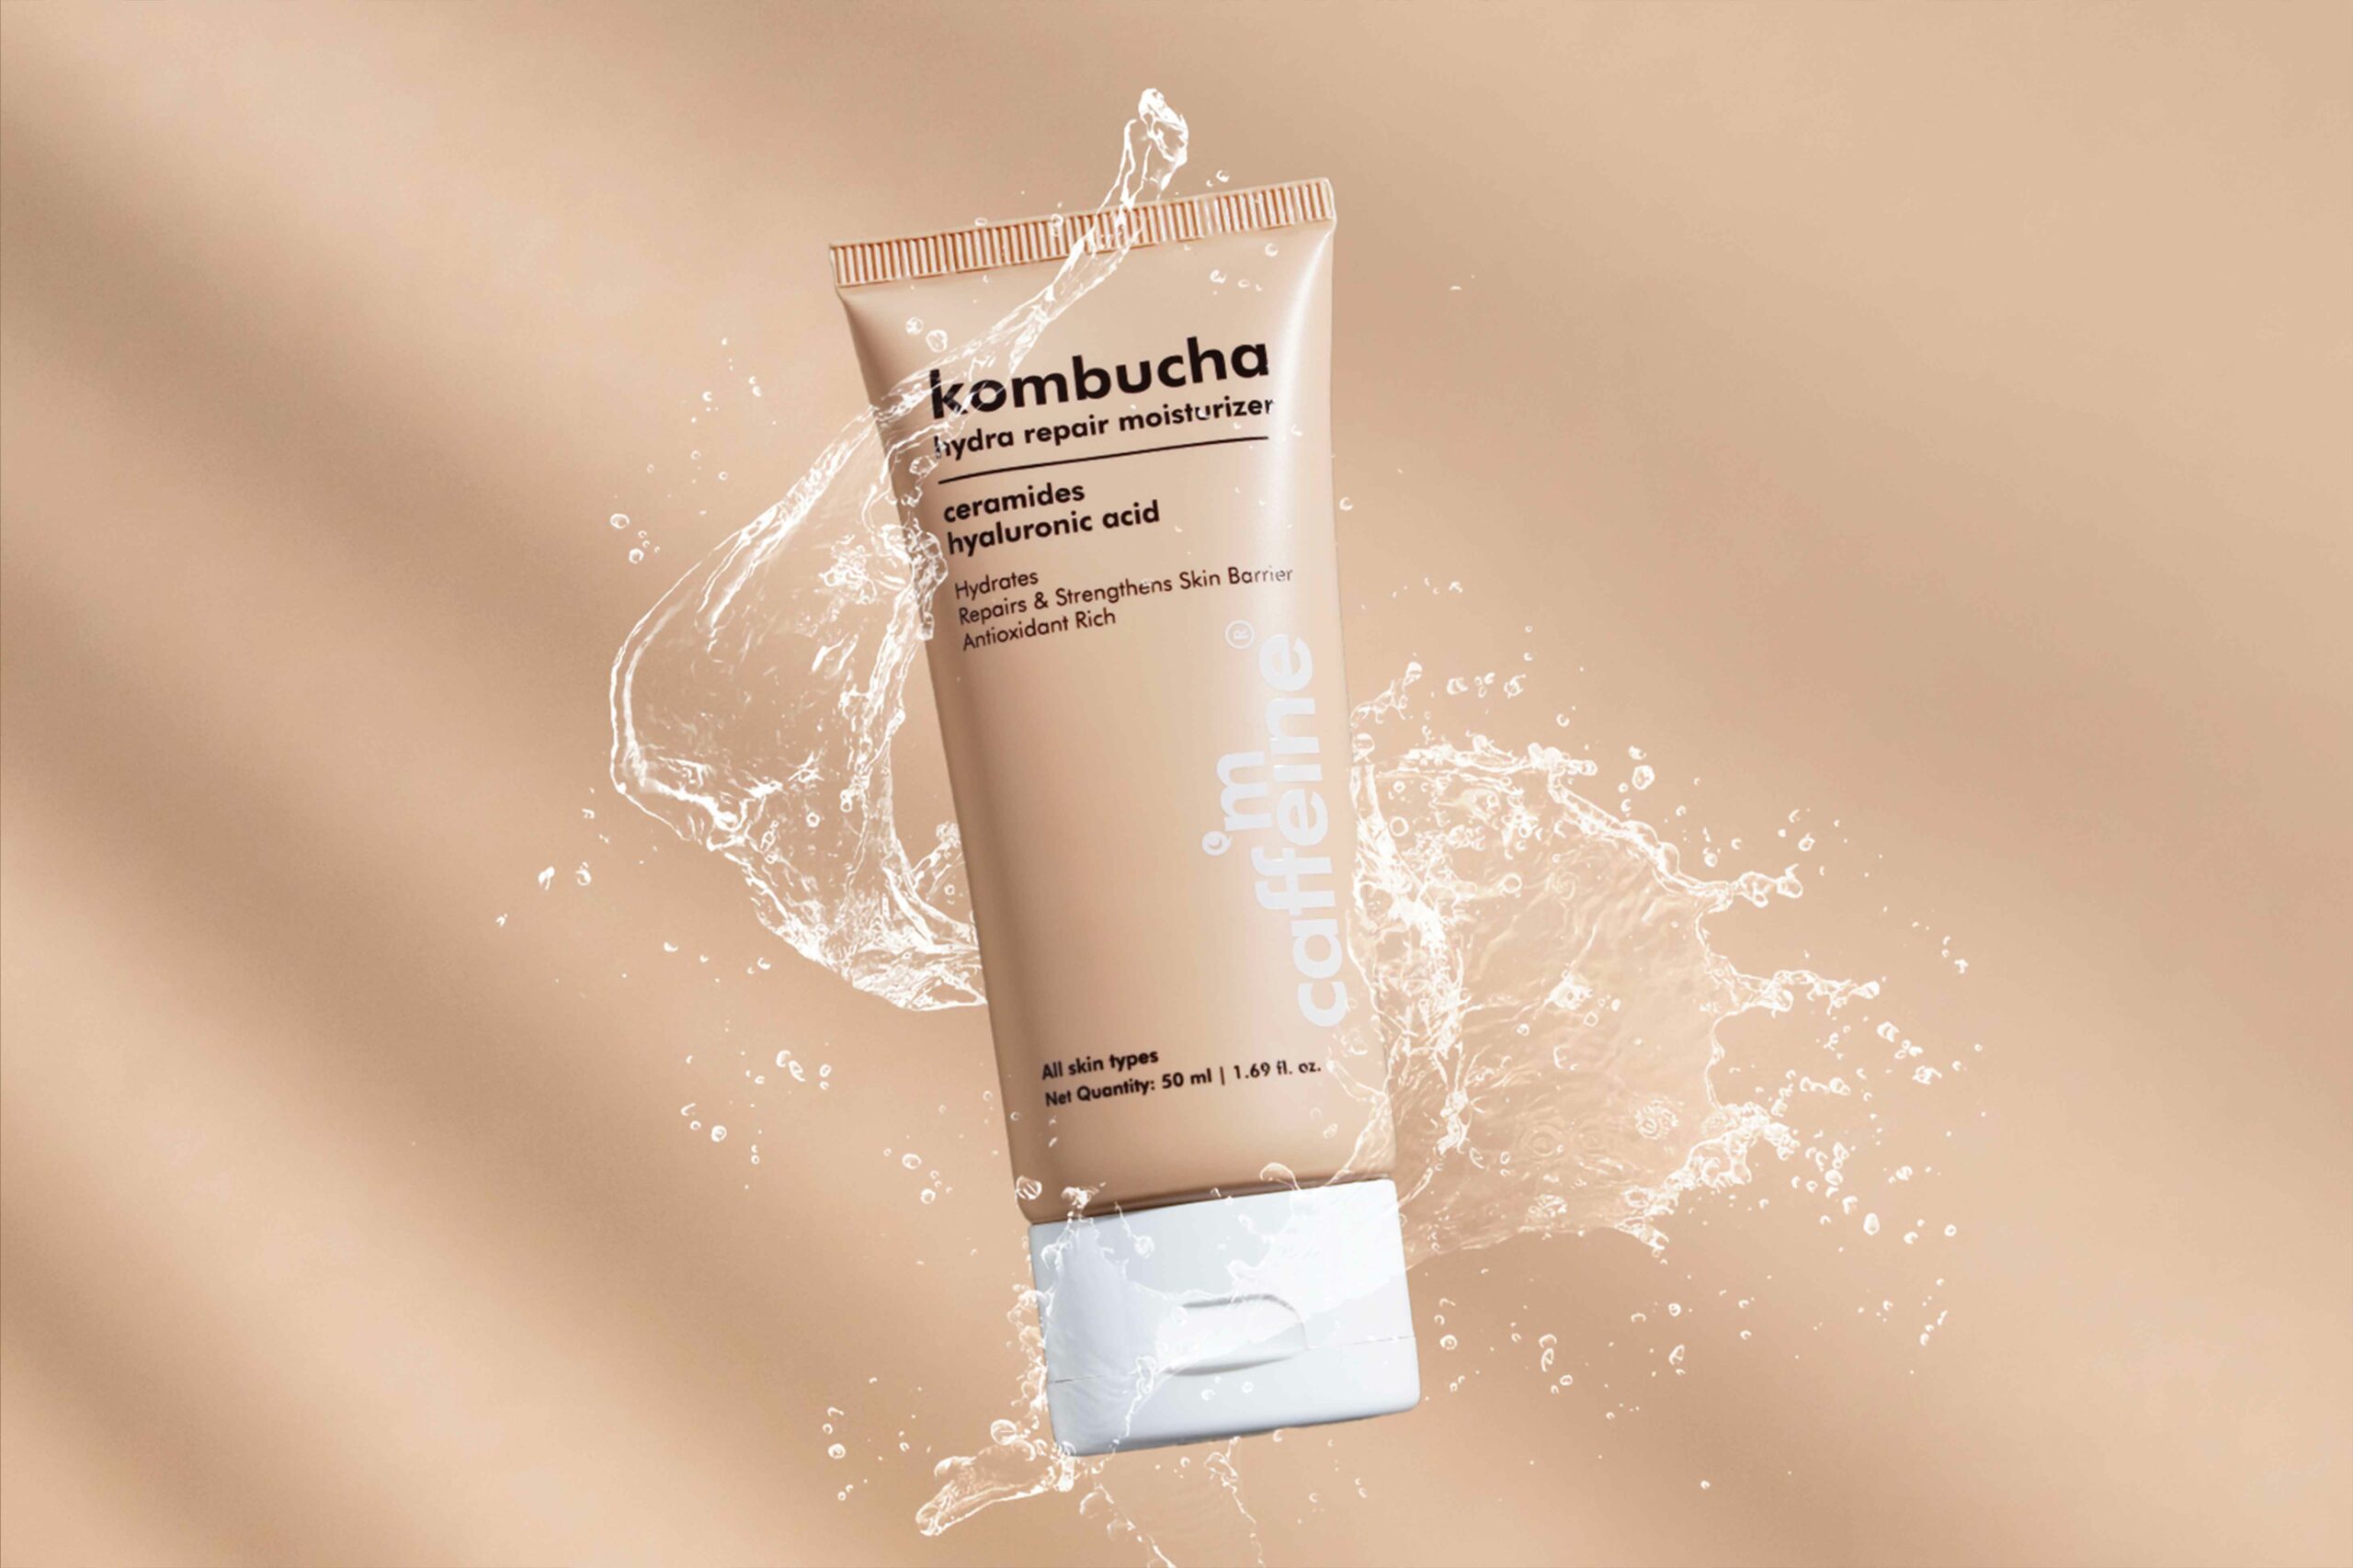 mCaffeine launches Kombucha infused skincare line